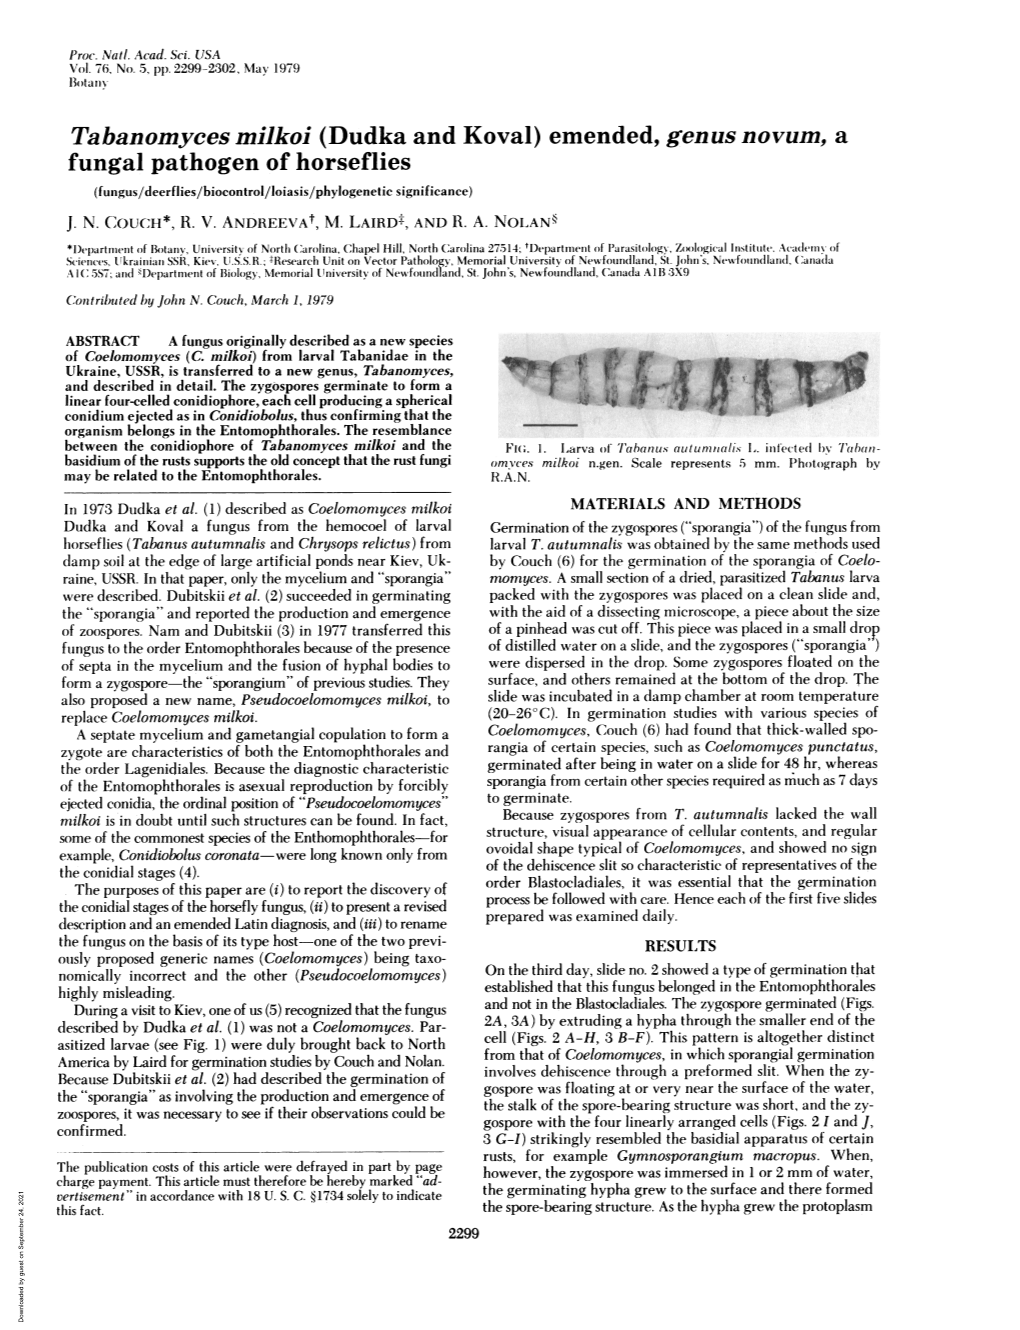 Fungal Pathogen of Horseflies (Fungus/Deerflies/Biocontrol/Loiasis/Phylogenetic Significance) J